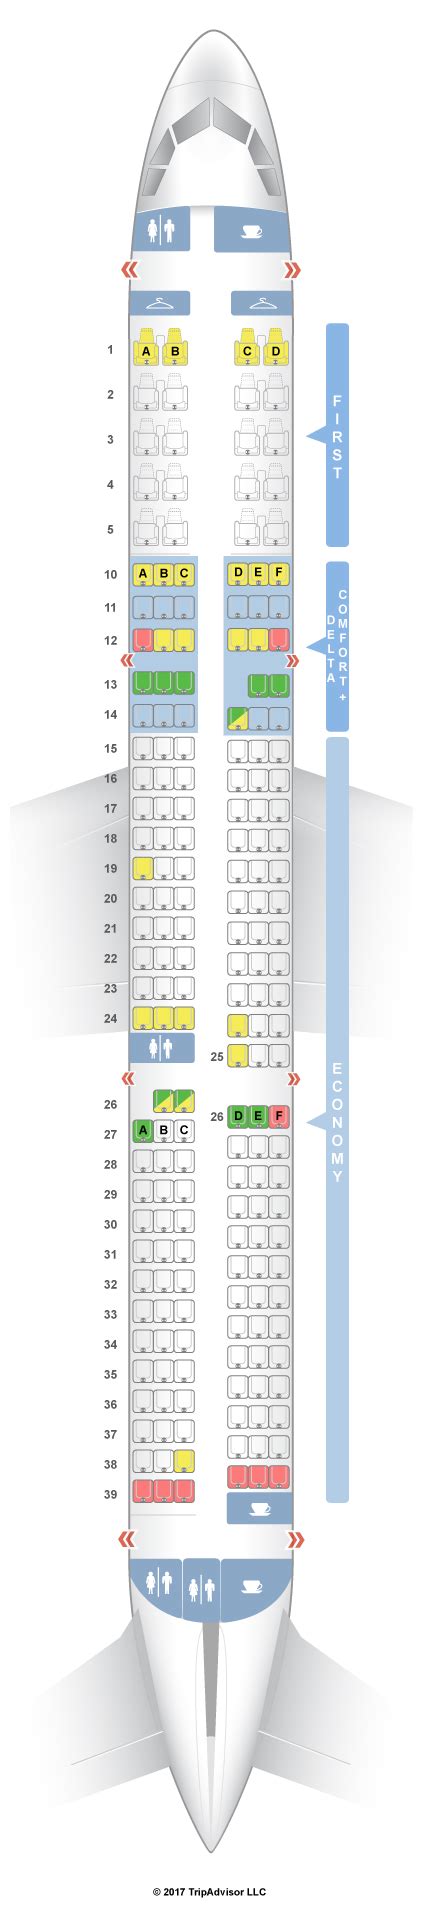 Seatguru Delta A321 American Airlines A321 Seating Chart Writflx Hot Sex Picture